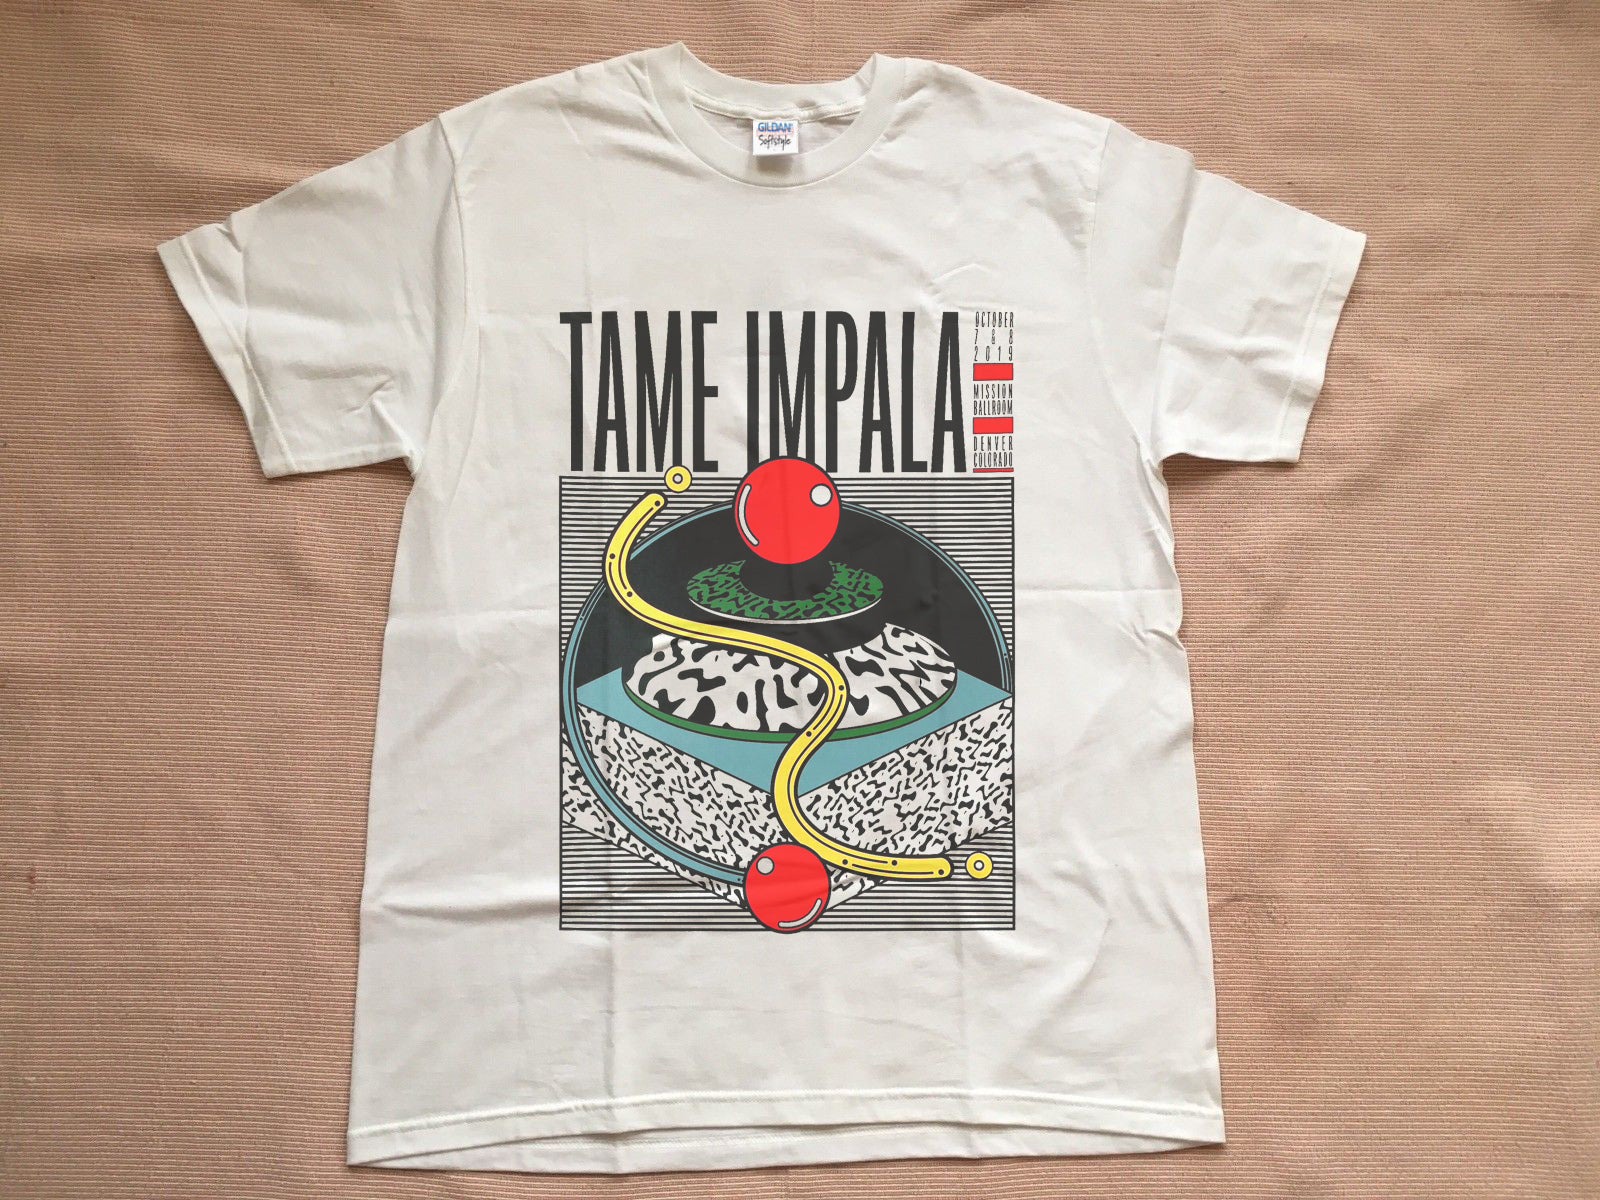 Copy of Tame Impala Tour shirt 2019